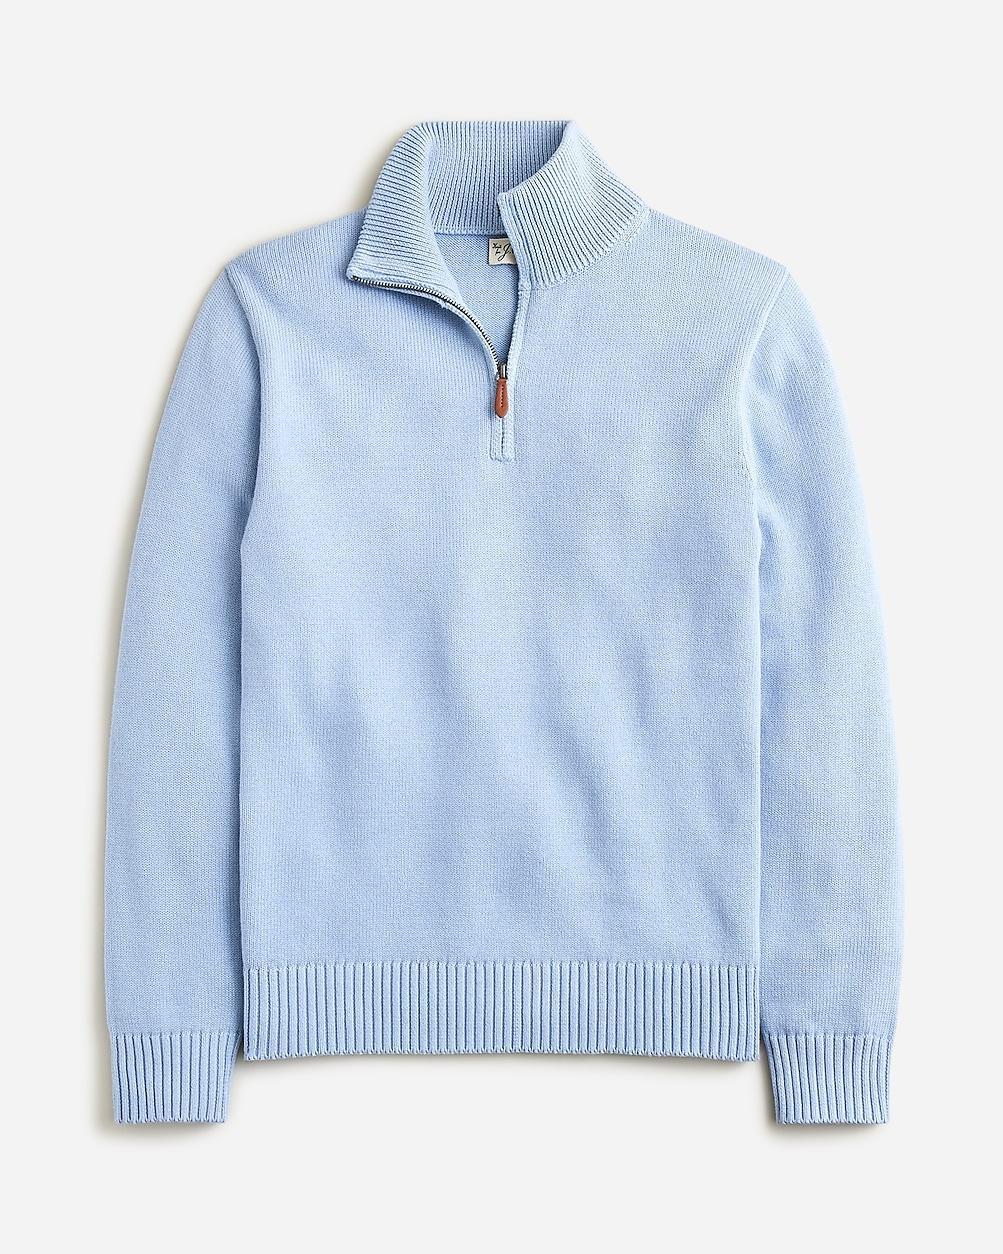 Heritage cotton half-zip sweater Product Image